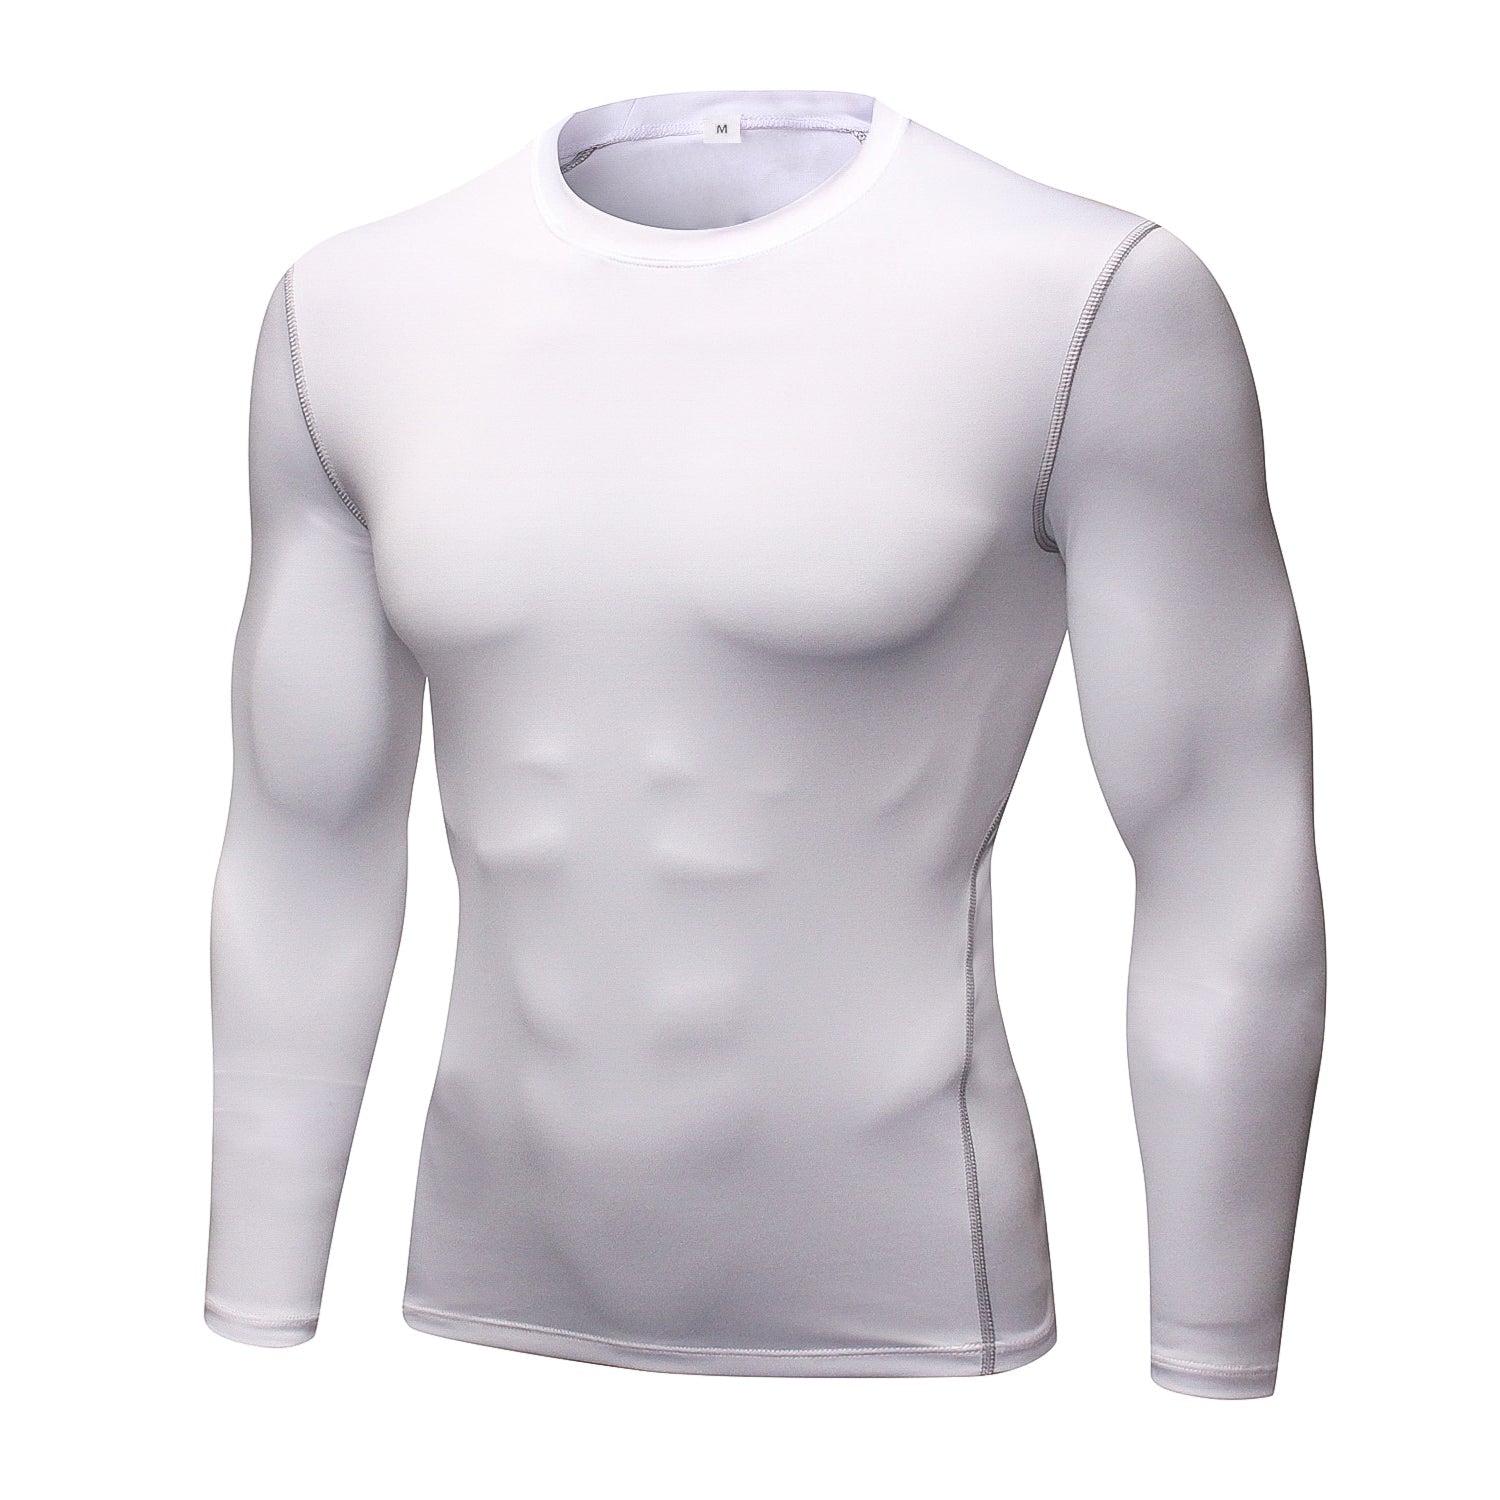 LANBAOSI Boys Compression Shirts Long Sleeve Sports Athletic Shirts Size 14